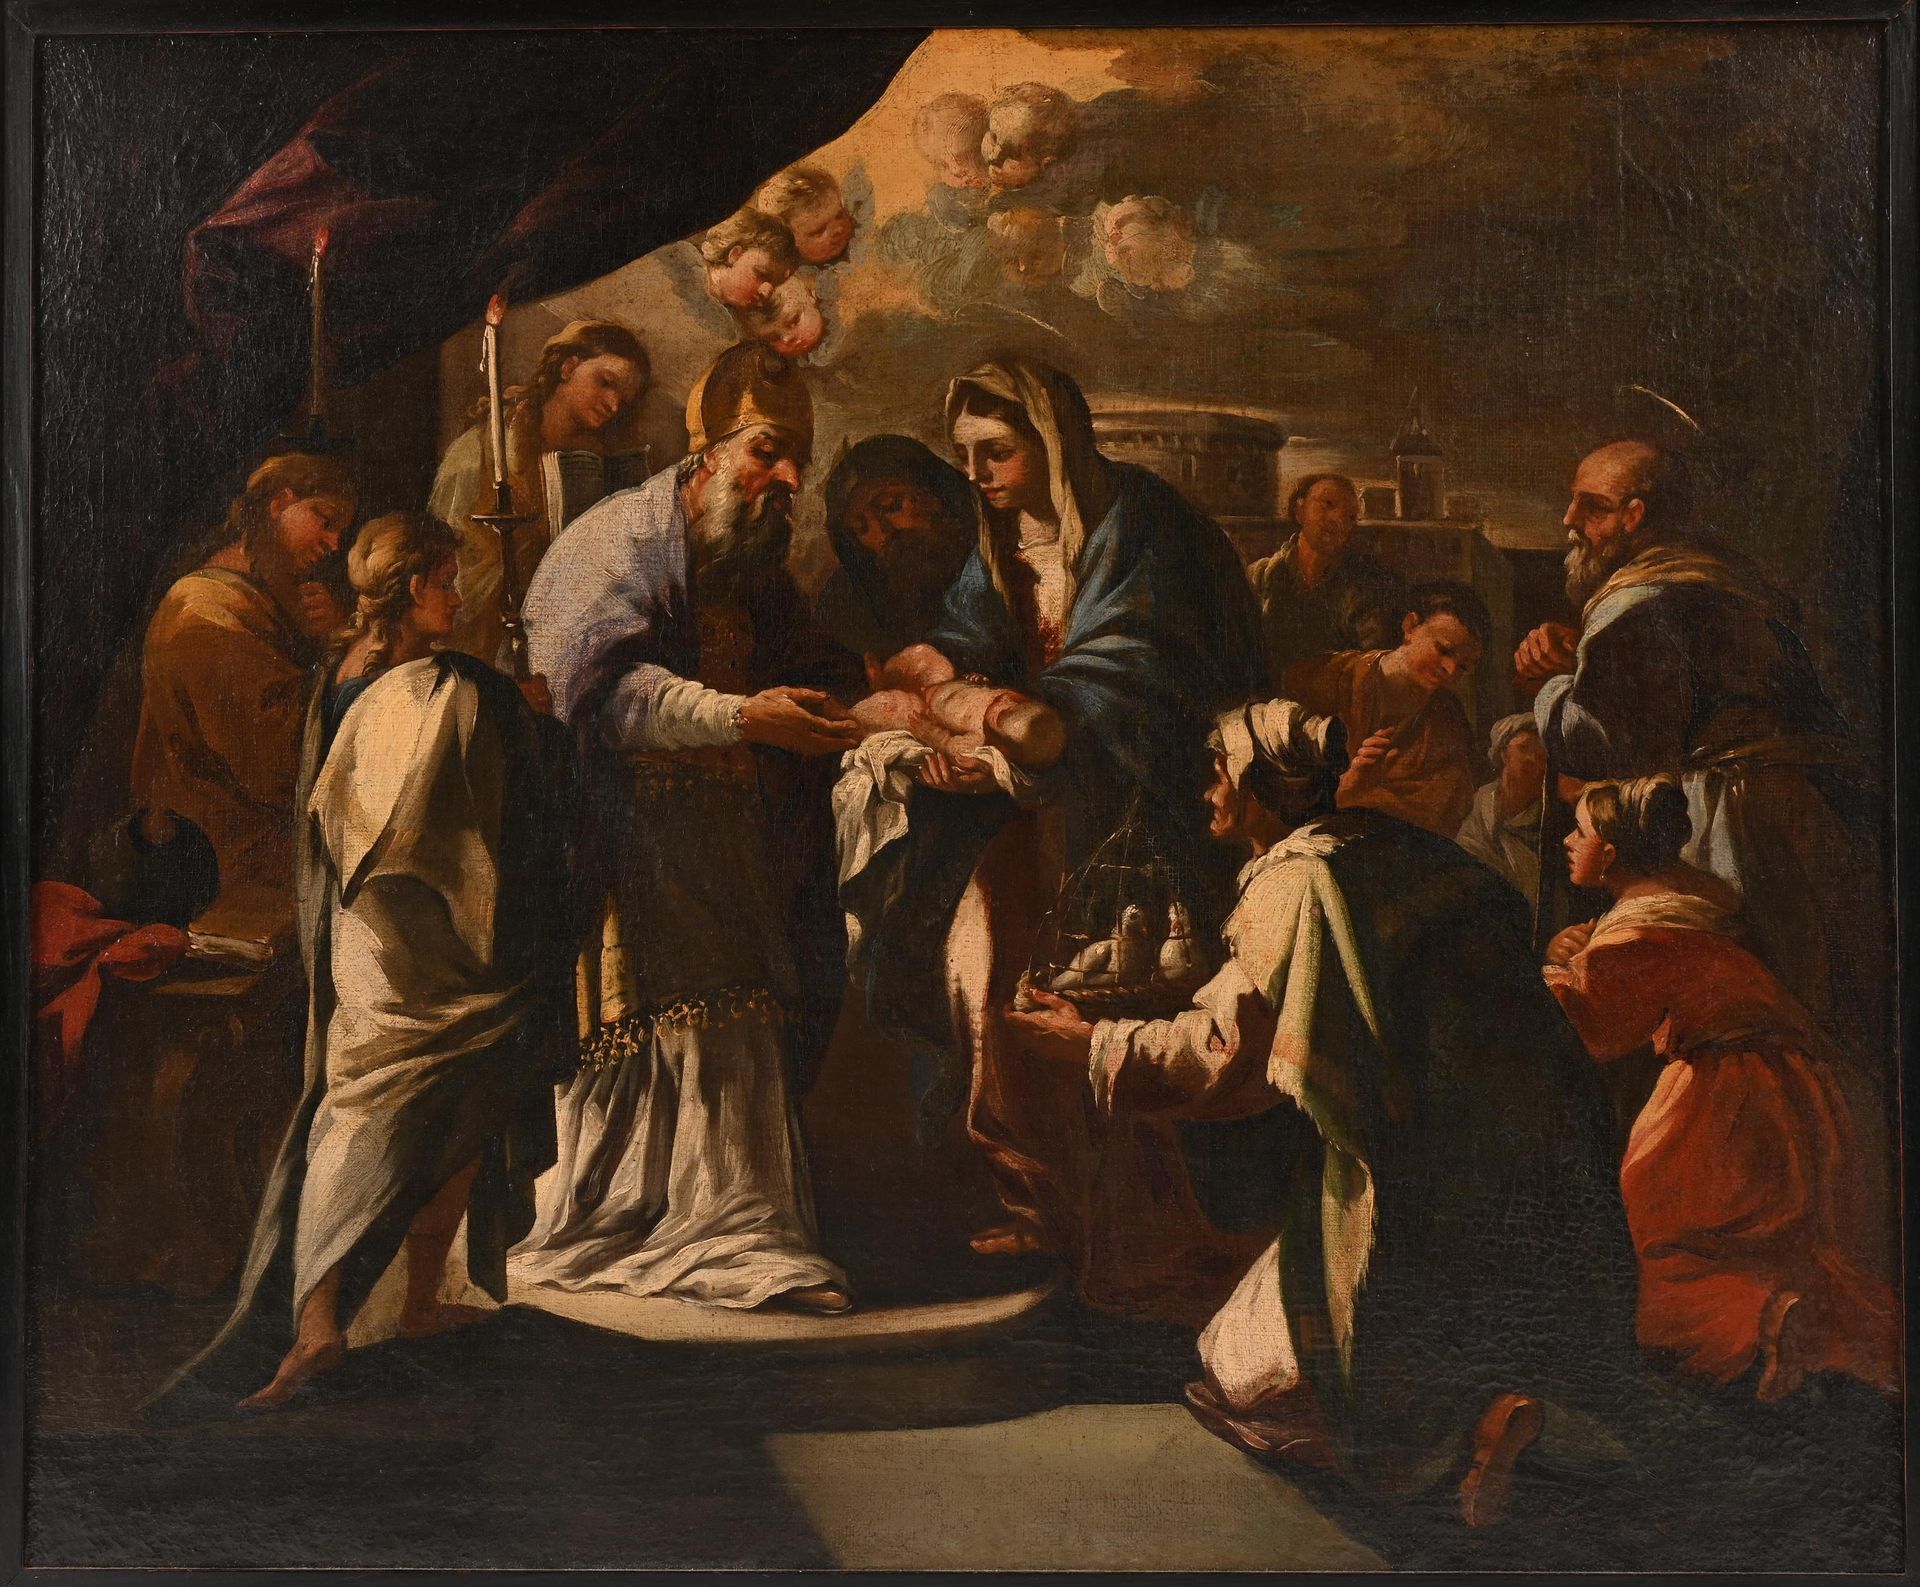 Luca GIORDANO (1634-1705) 卢卡-吉约达诺（1634-1705），随行人员，17世纪意大利（那不勒斯）画派--《耶稣的割礼》布面油画

&hellip;